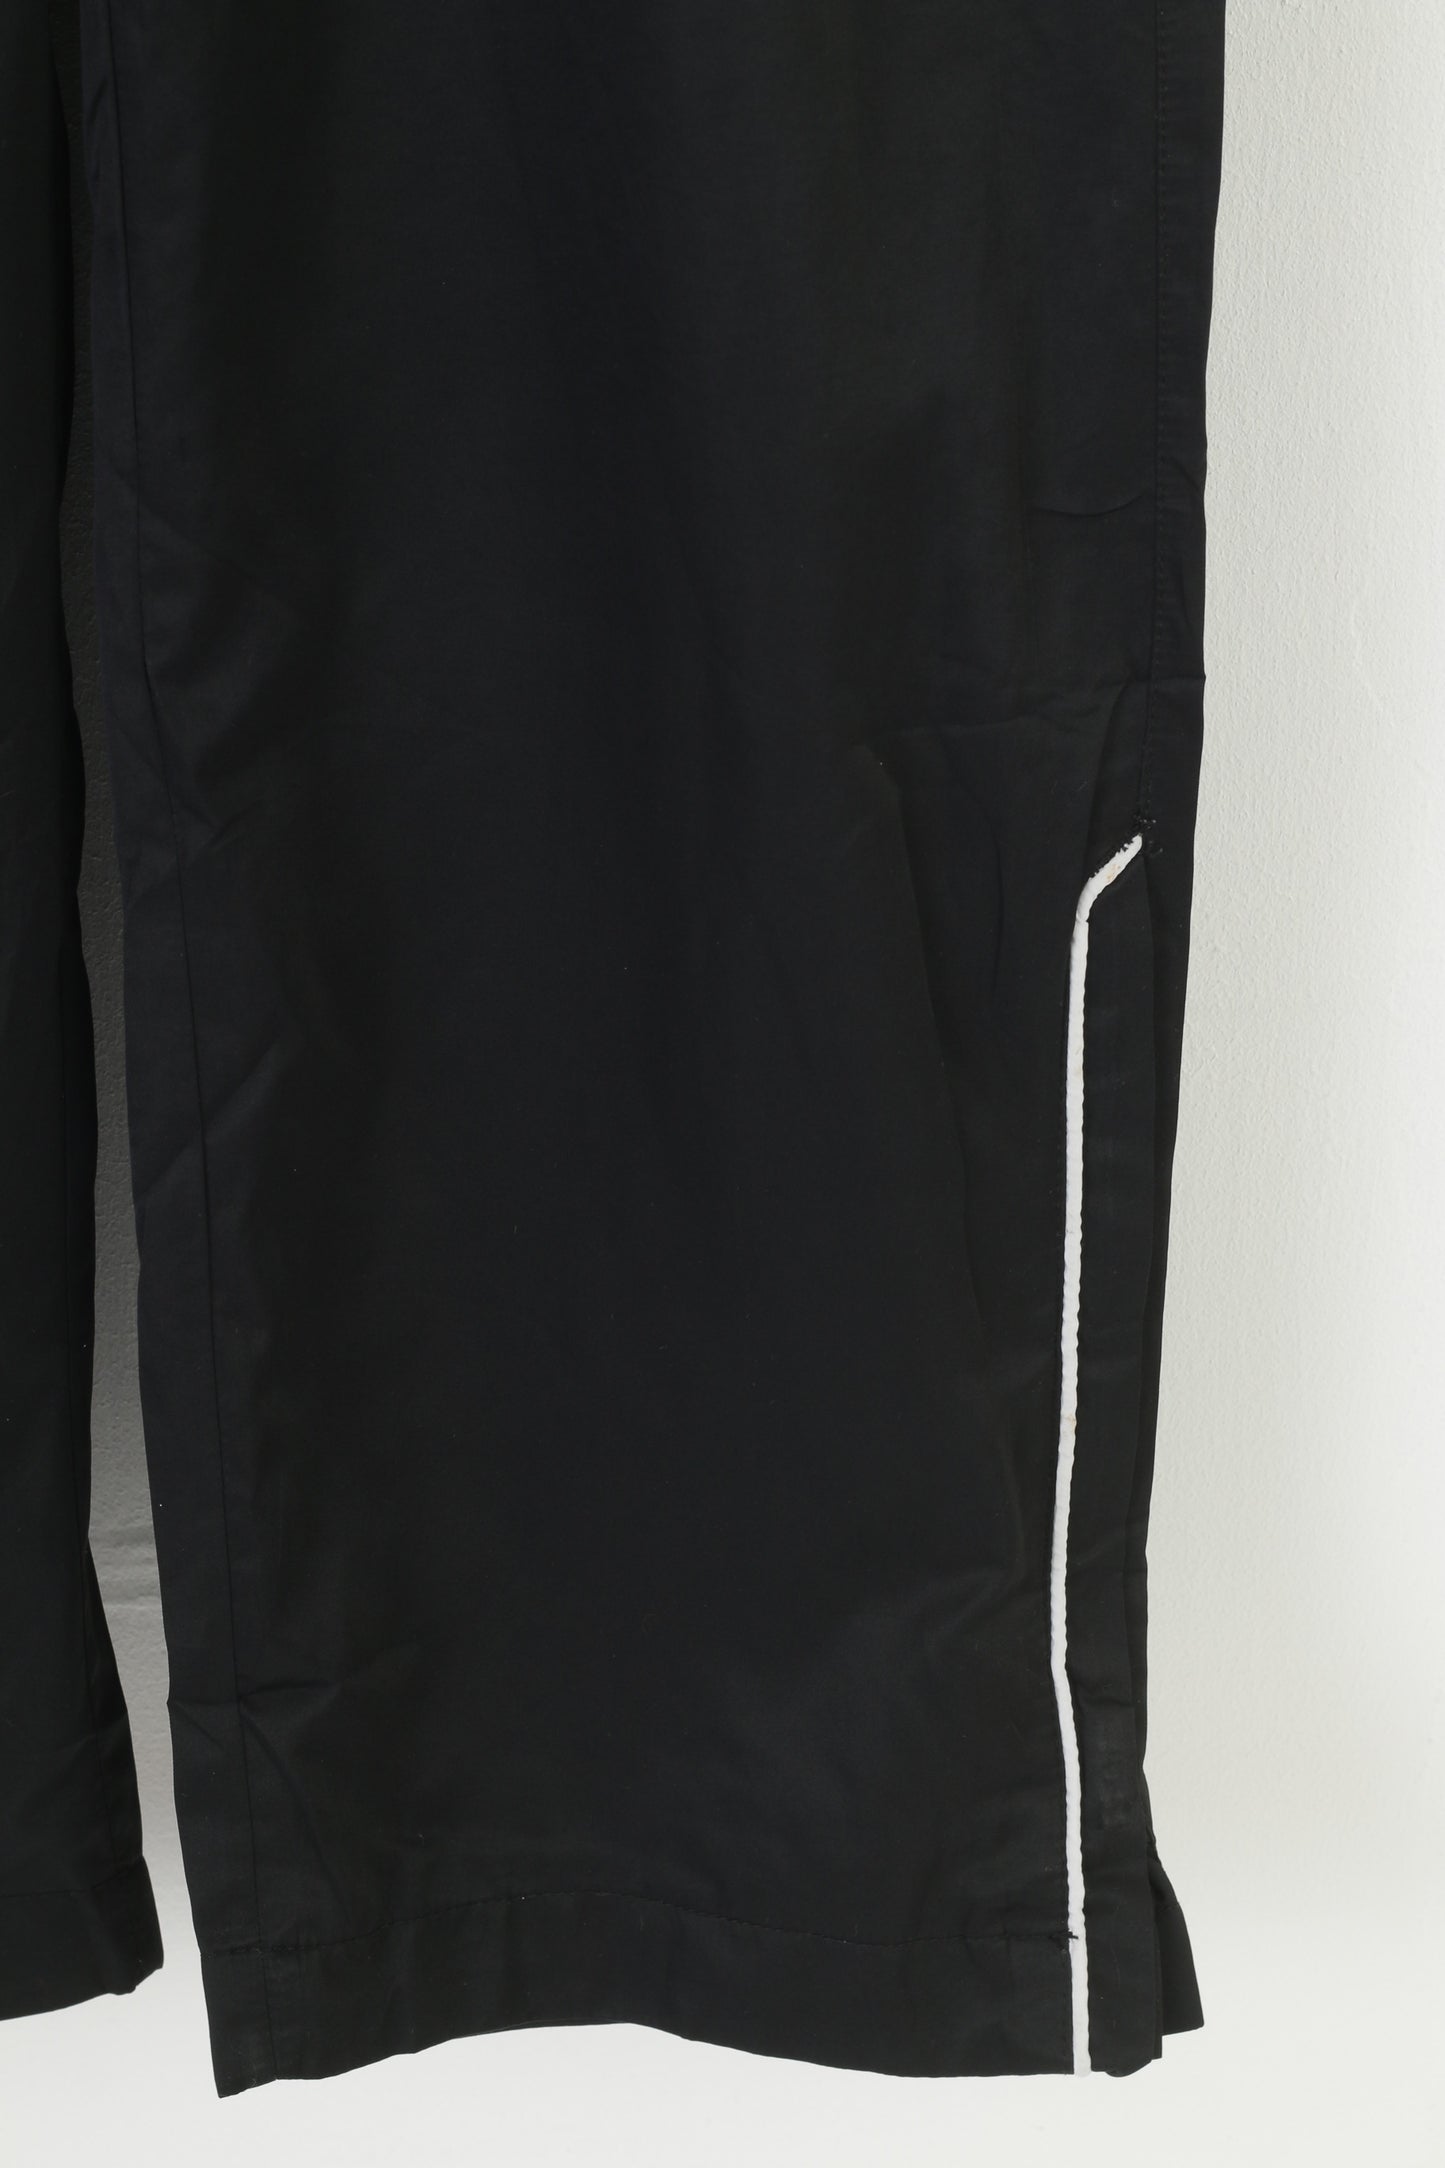 FZ Forza Boys 12 Age Trousers Black Sportswear Track Bottoms Elastic Waist Vintage Pants